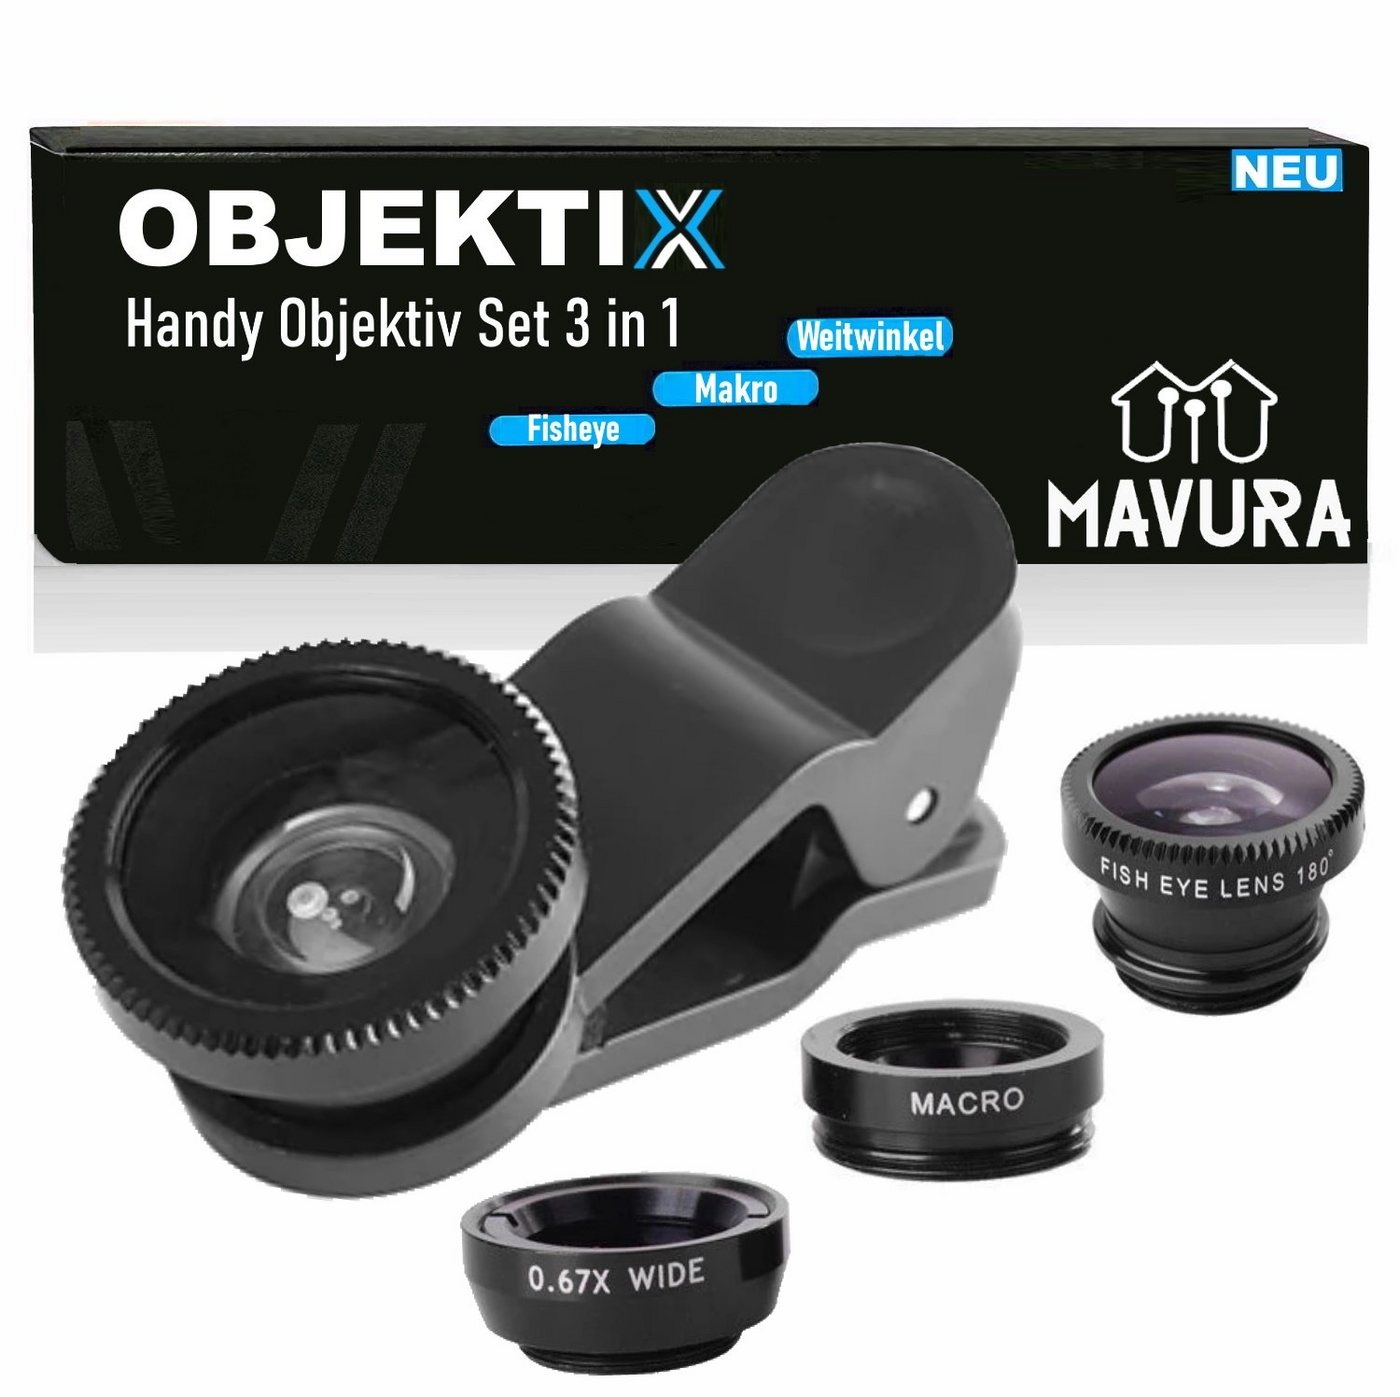 MAVURA OBJEKTIX Universal Handy Objektiv Set 3in1 Smartphone Linsen Objektiv, (Fisheye + Weitwinkel + Makro Kamera) schwarz